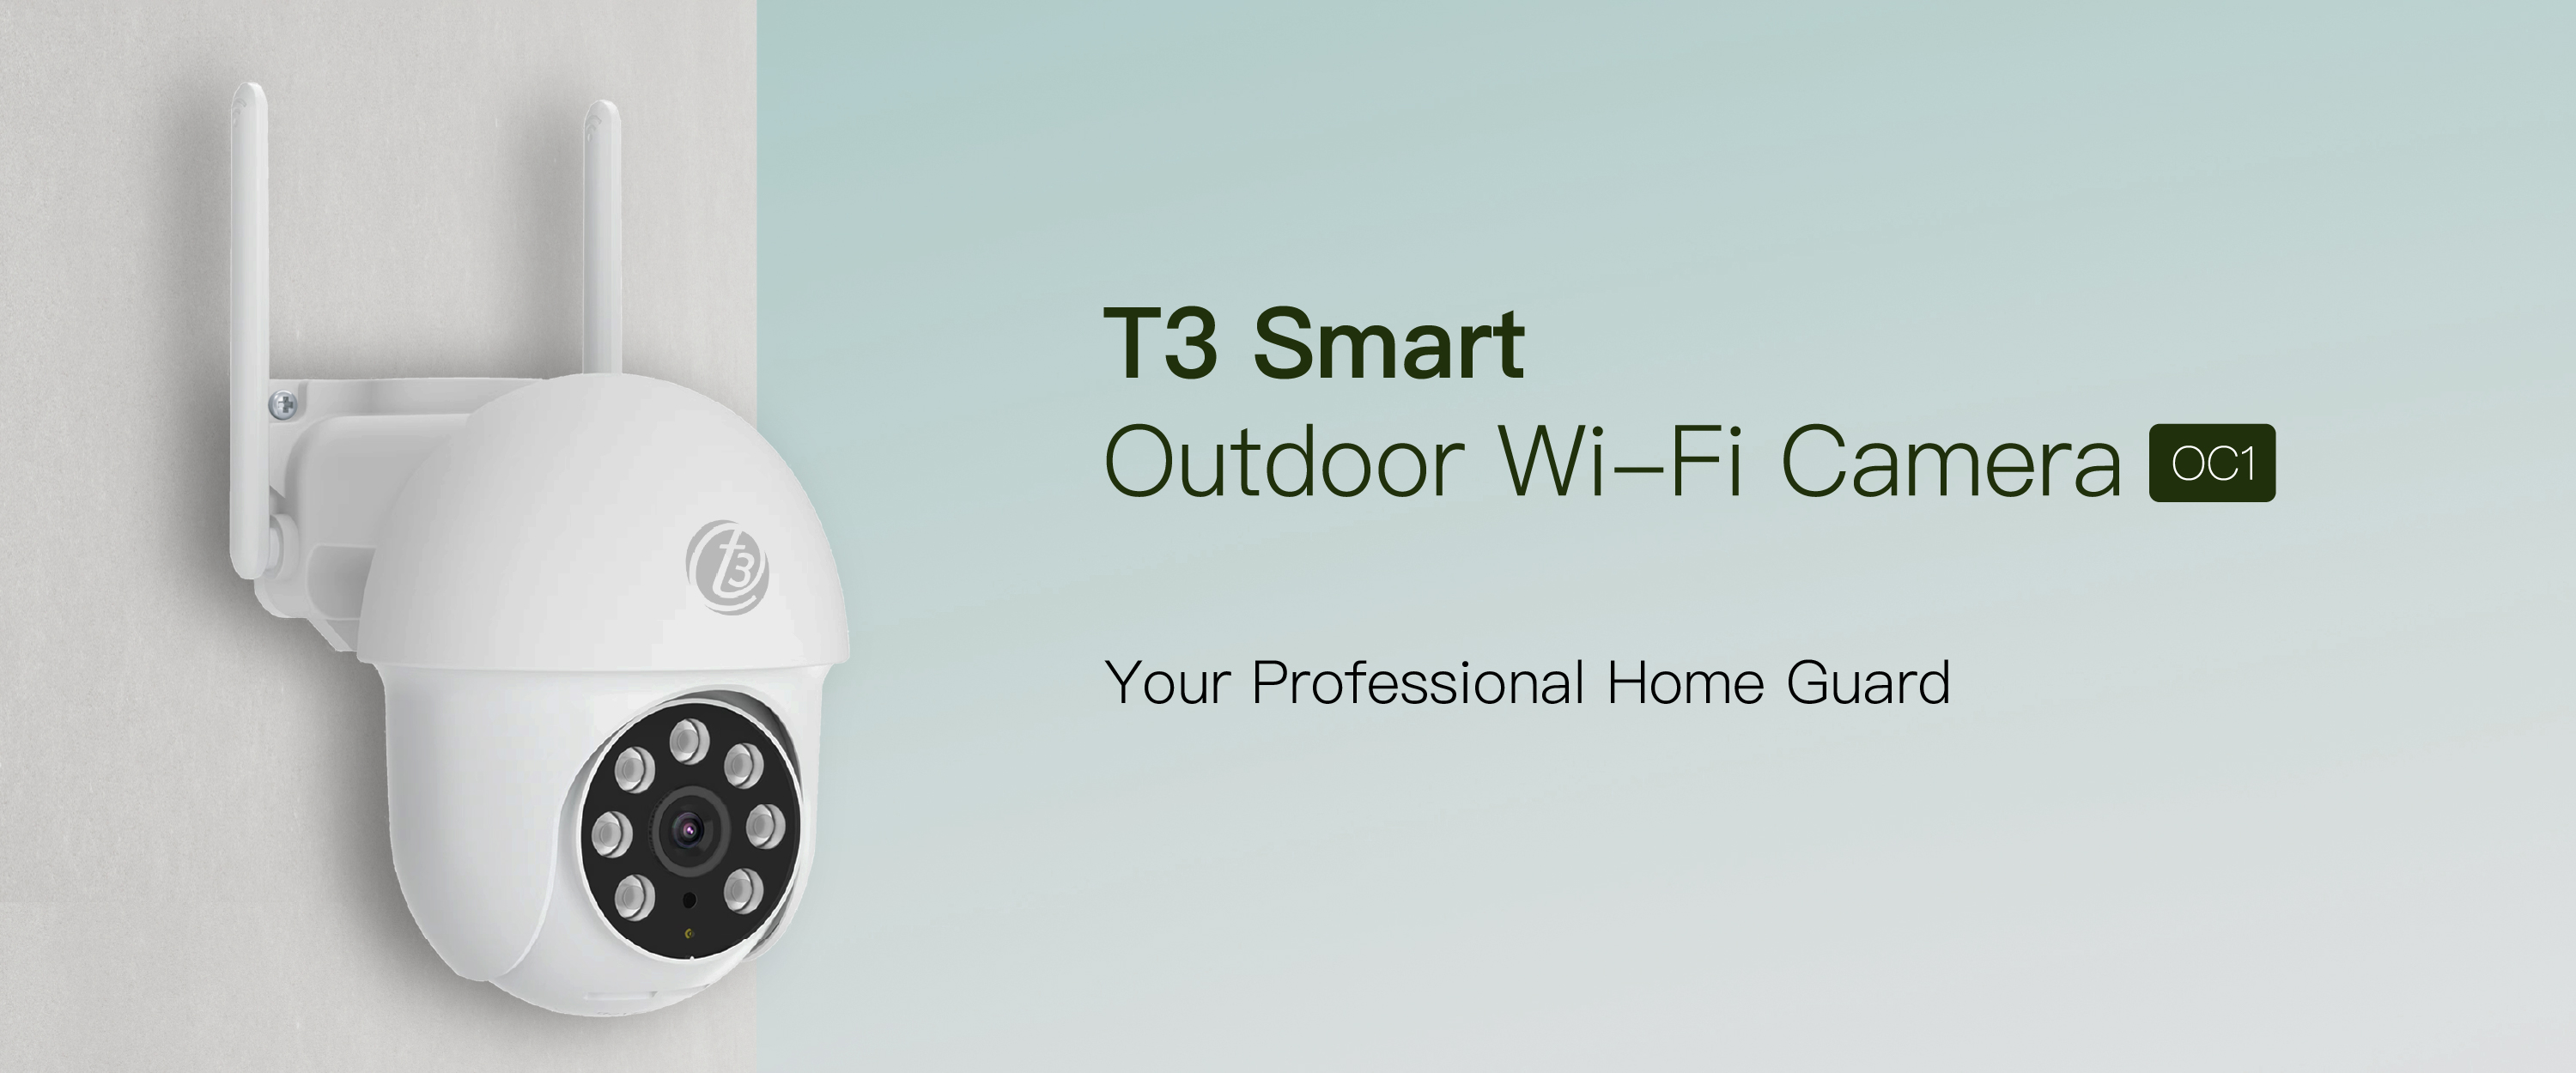 T3 Smart Outdoor WiFi Camera OC1